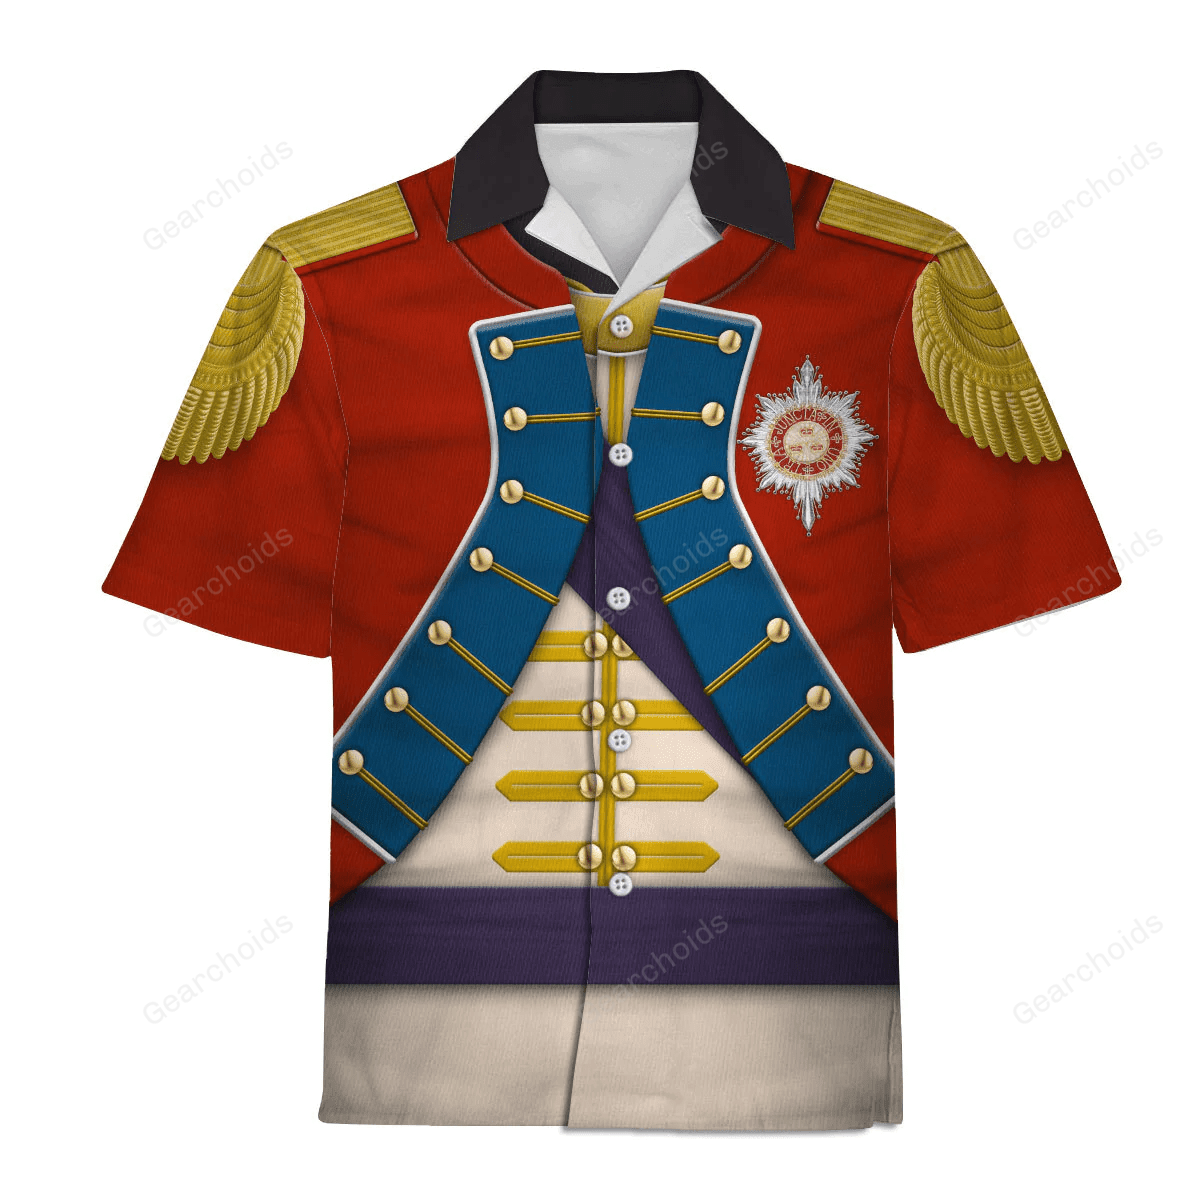 General Washington - The American Revolution Uniform Hawaiian Shirt